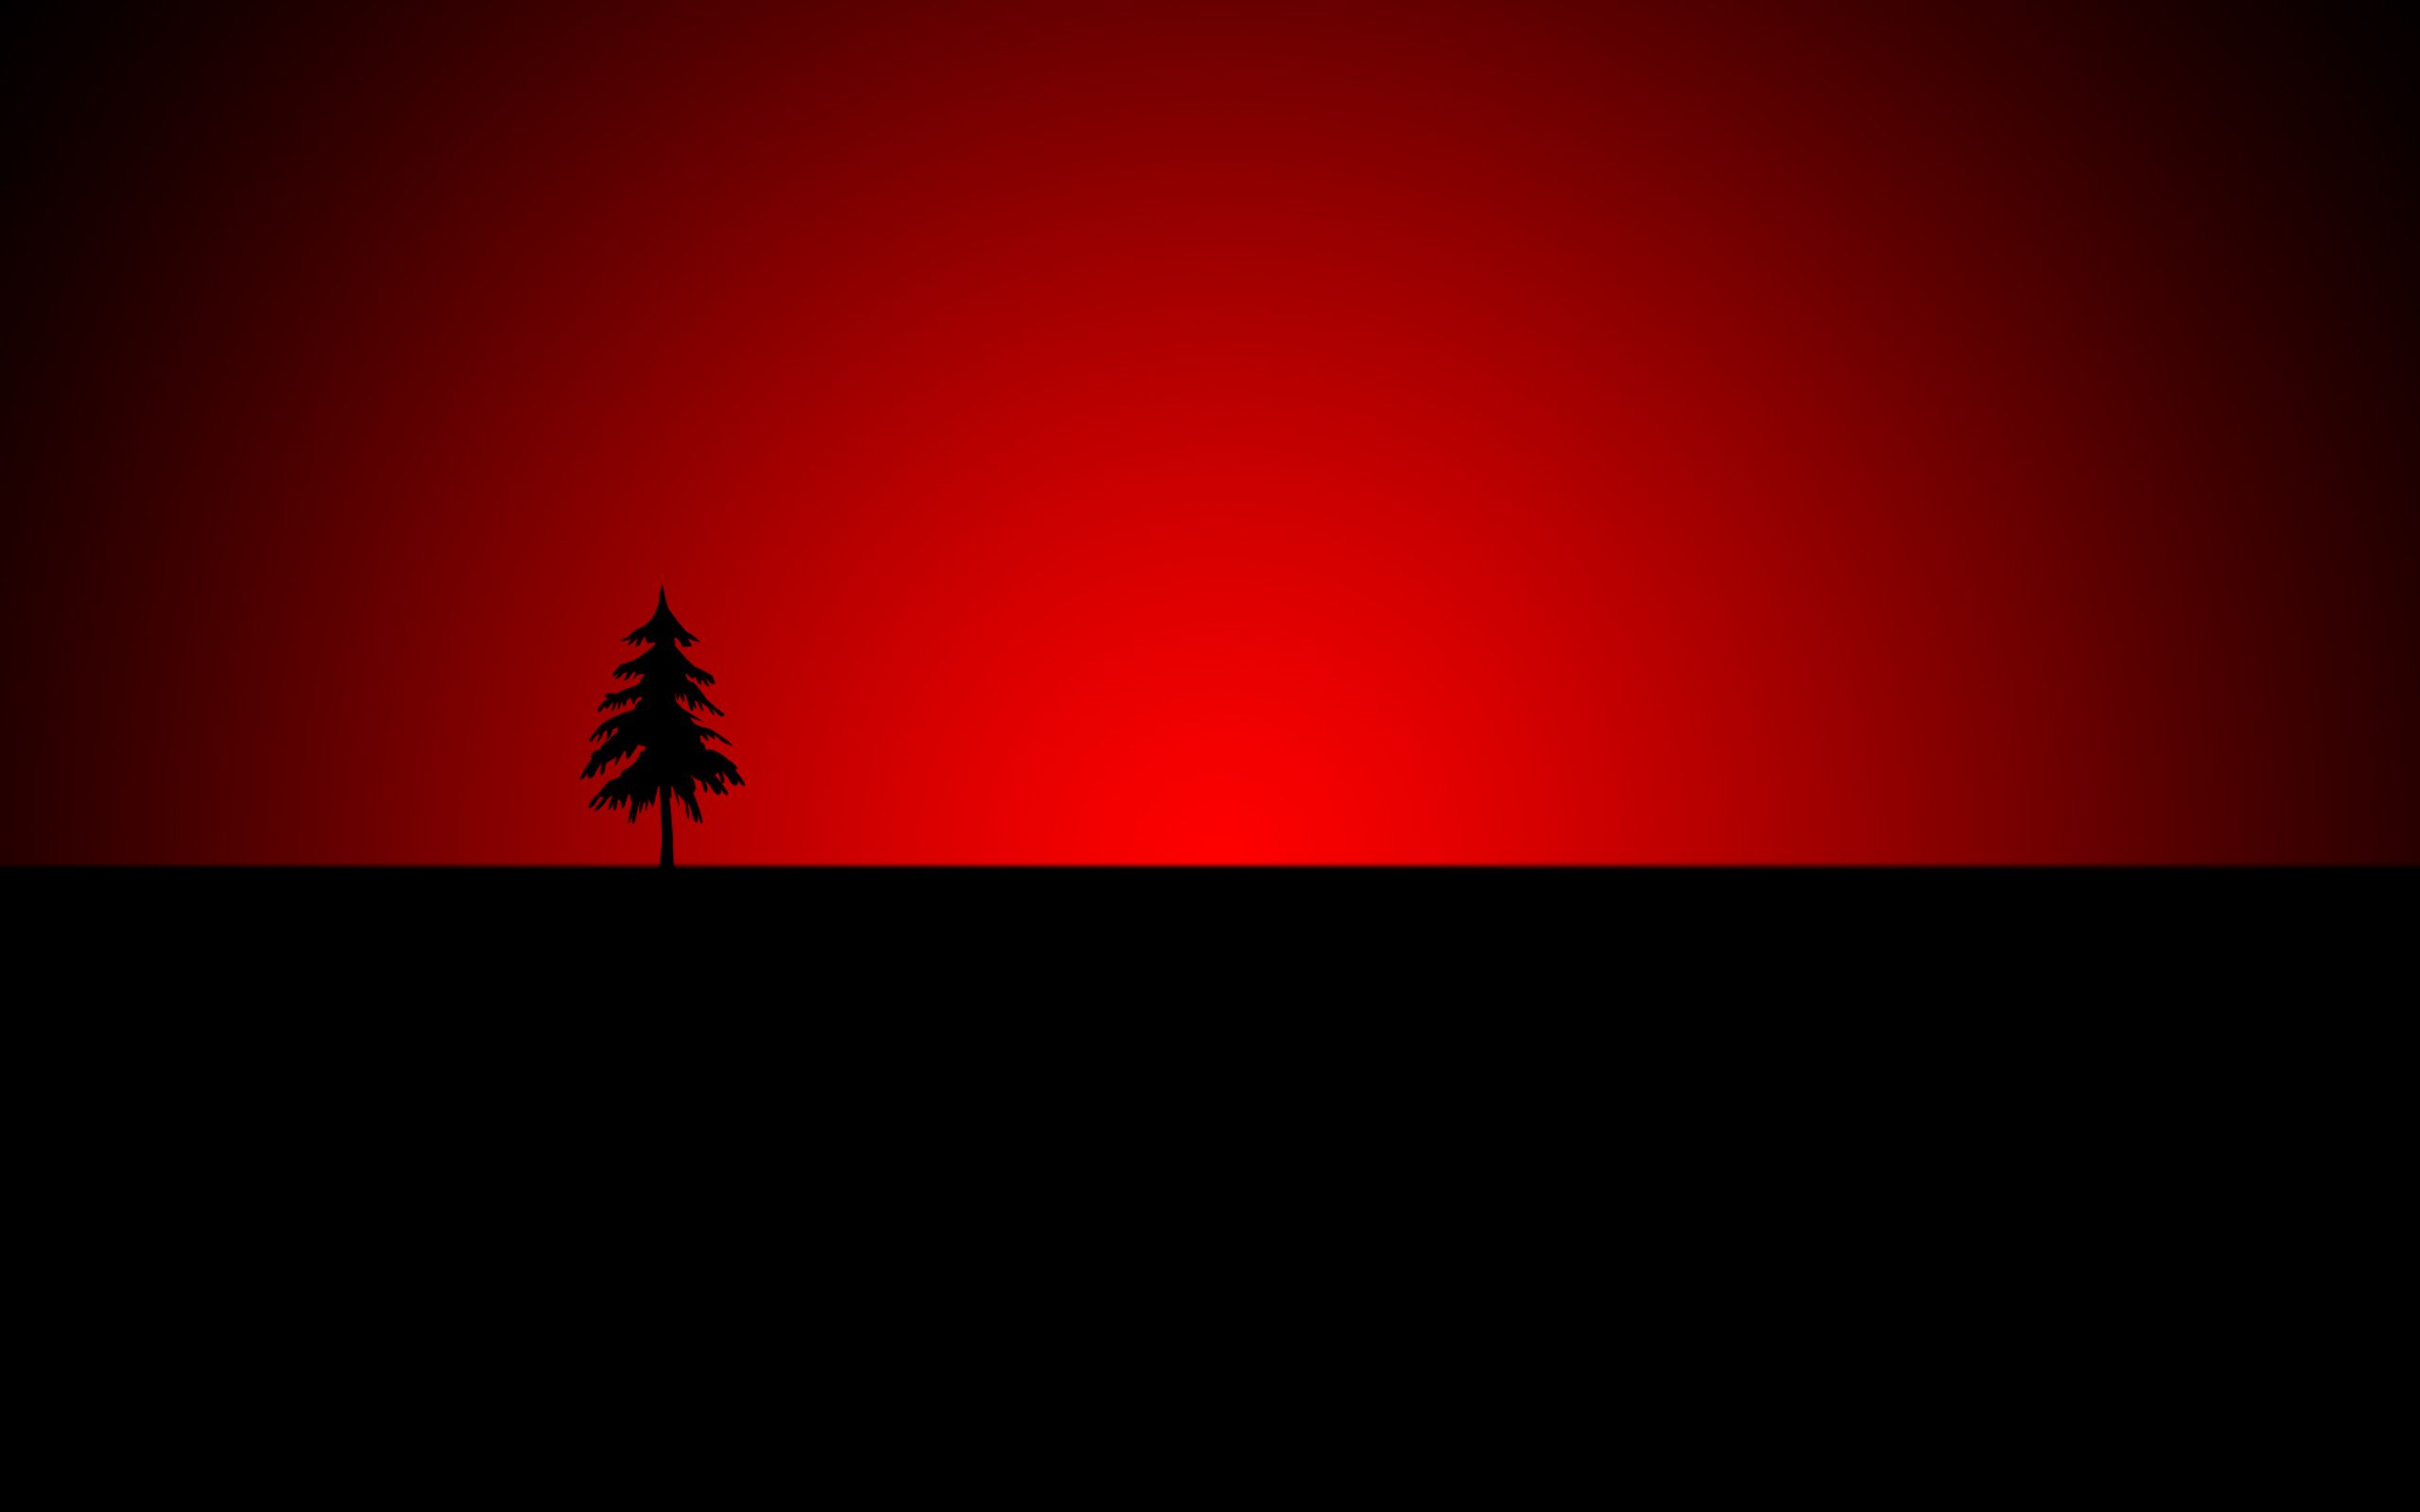 Red Black Vintage Wallpaper Red Sunset Background. Red and black wallpaper, Red sunset, The magic faraway tree